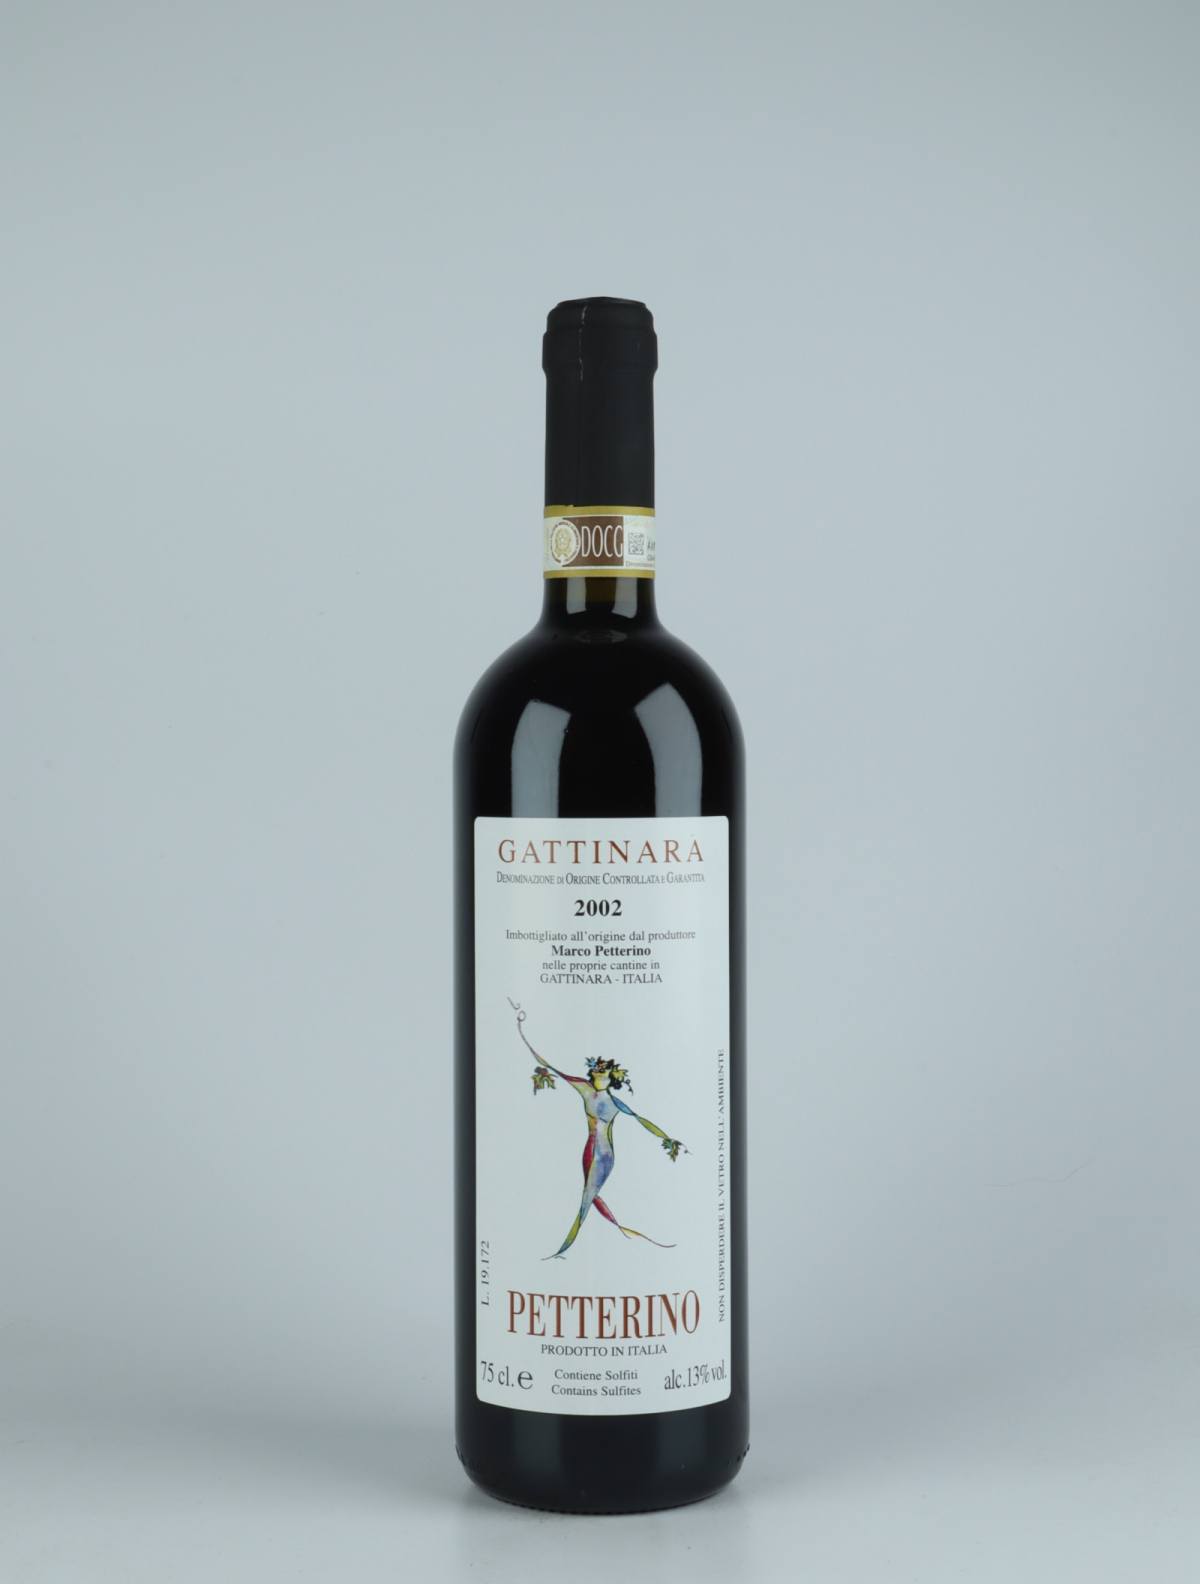 A bottle 2002 Gattinara Red wine from Petterino, Piedmont in Italy